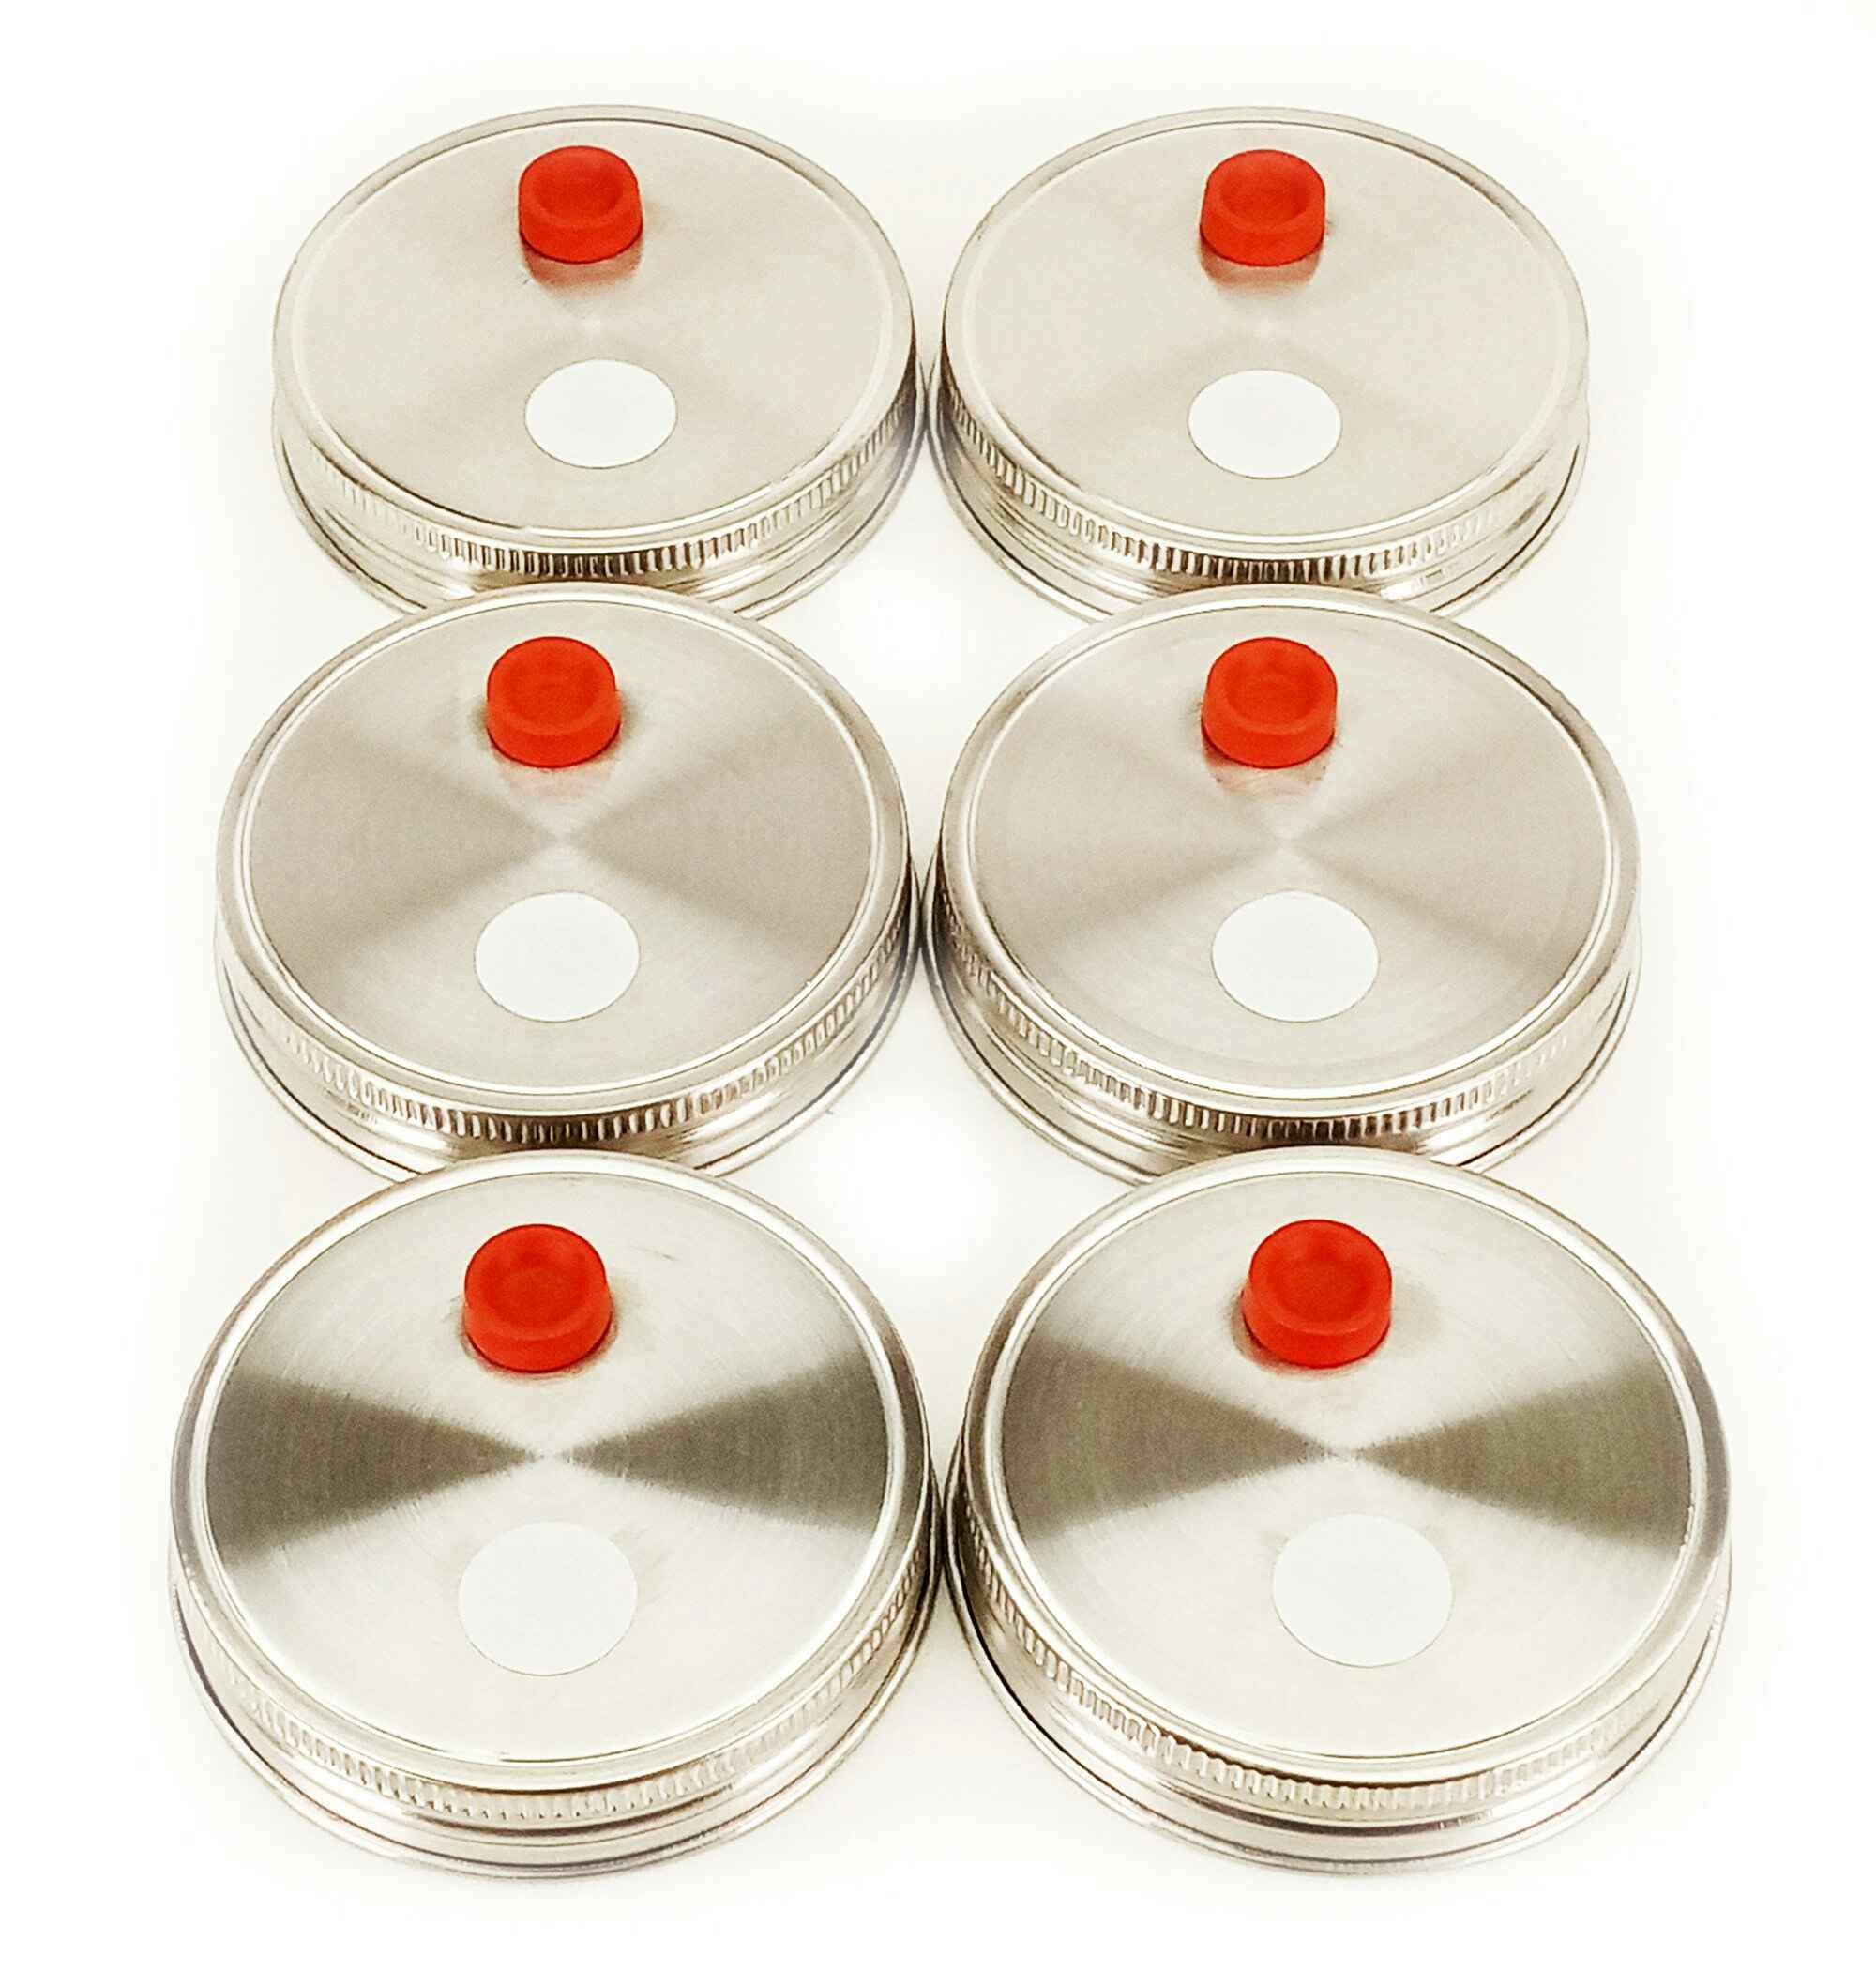 6 Pack Stainless Steel Mushroom Mason Jar Lids For Grain Spawn - Wide Mouth Rust Proof Metal